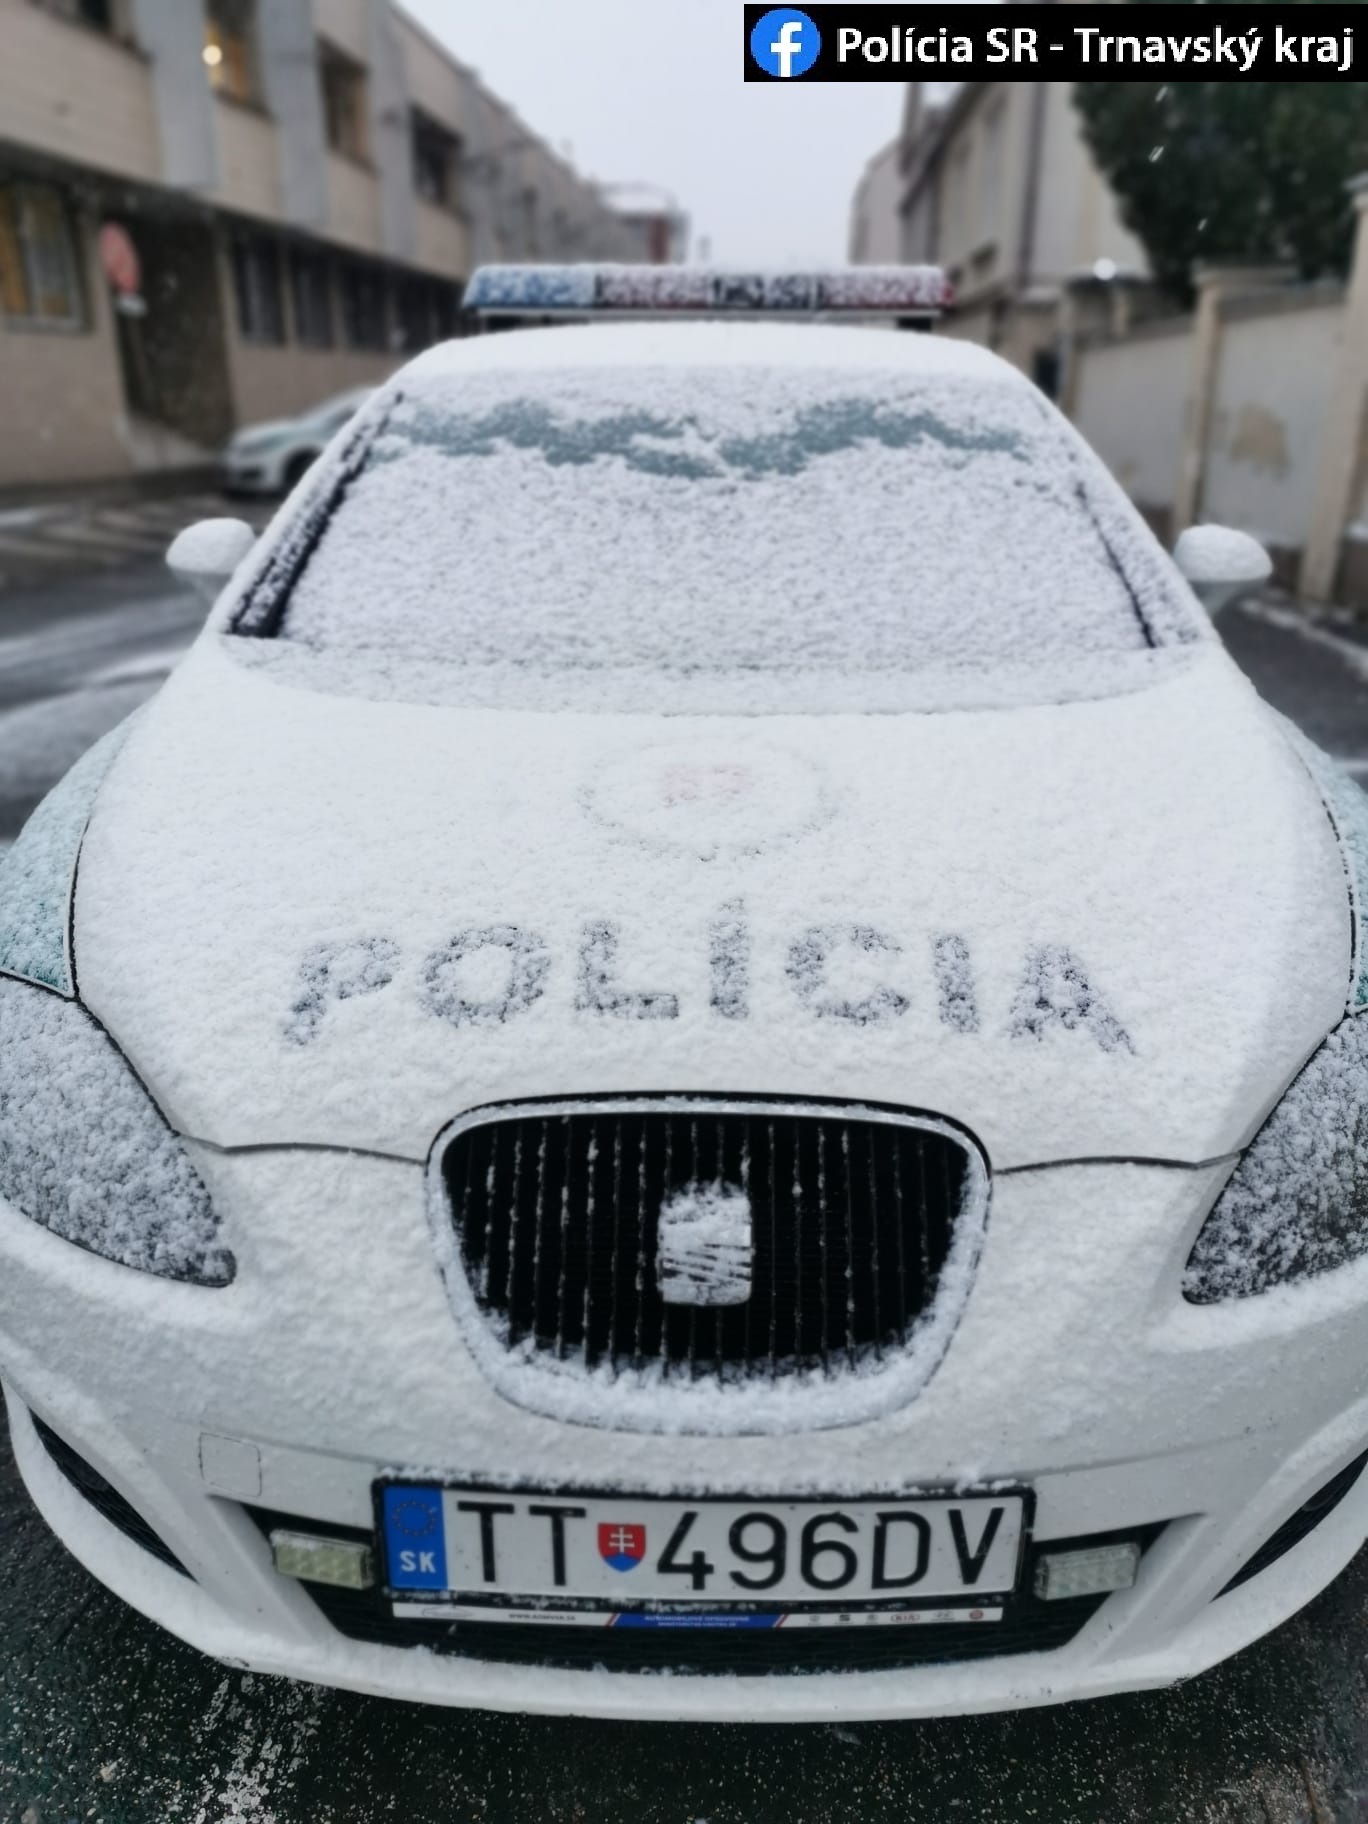 V Trnavskom kraji sneží.